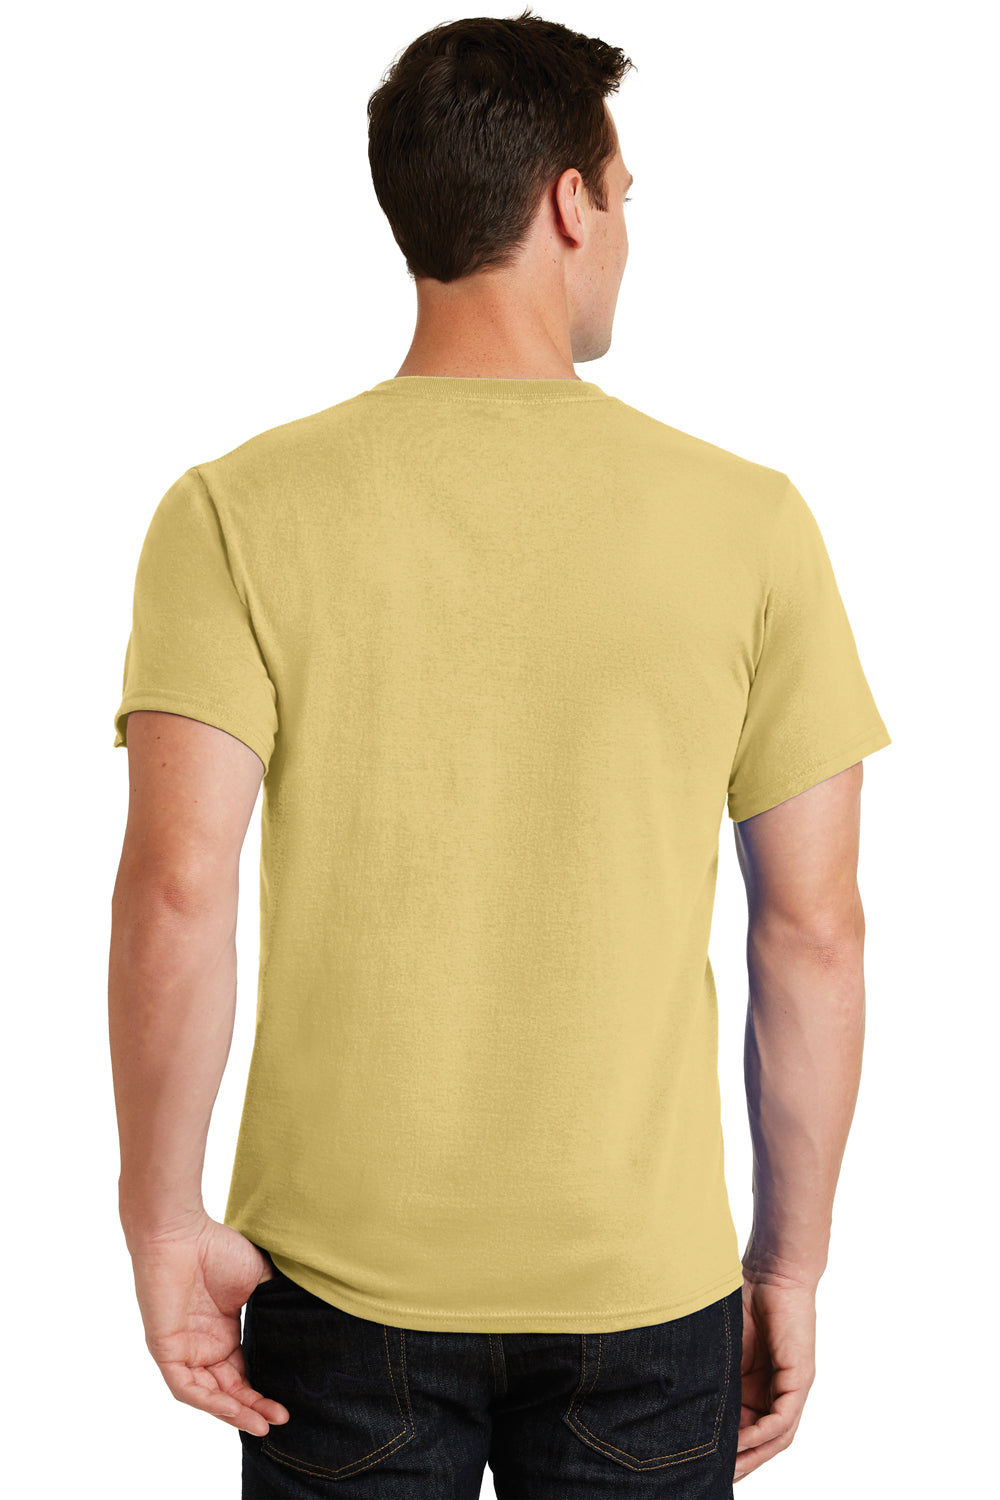 Port & Company PC61 Mens Essential Short Sleeve Crewneck T-Shirt Daffodil Yellow Back